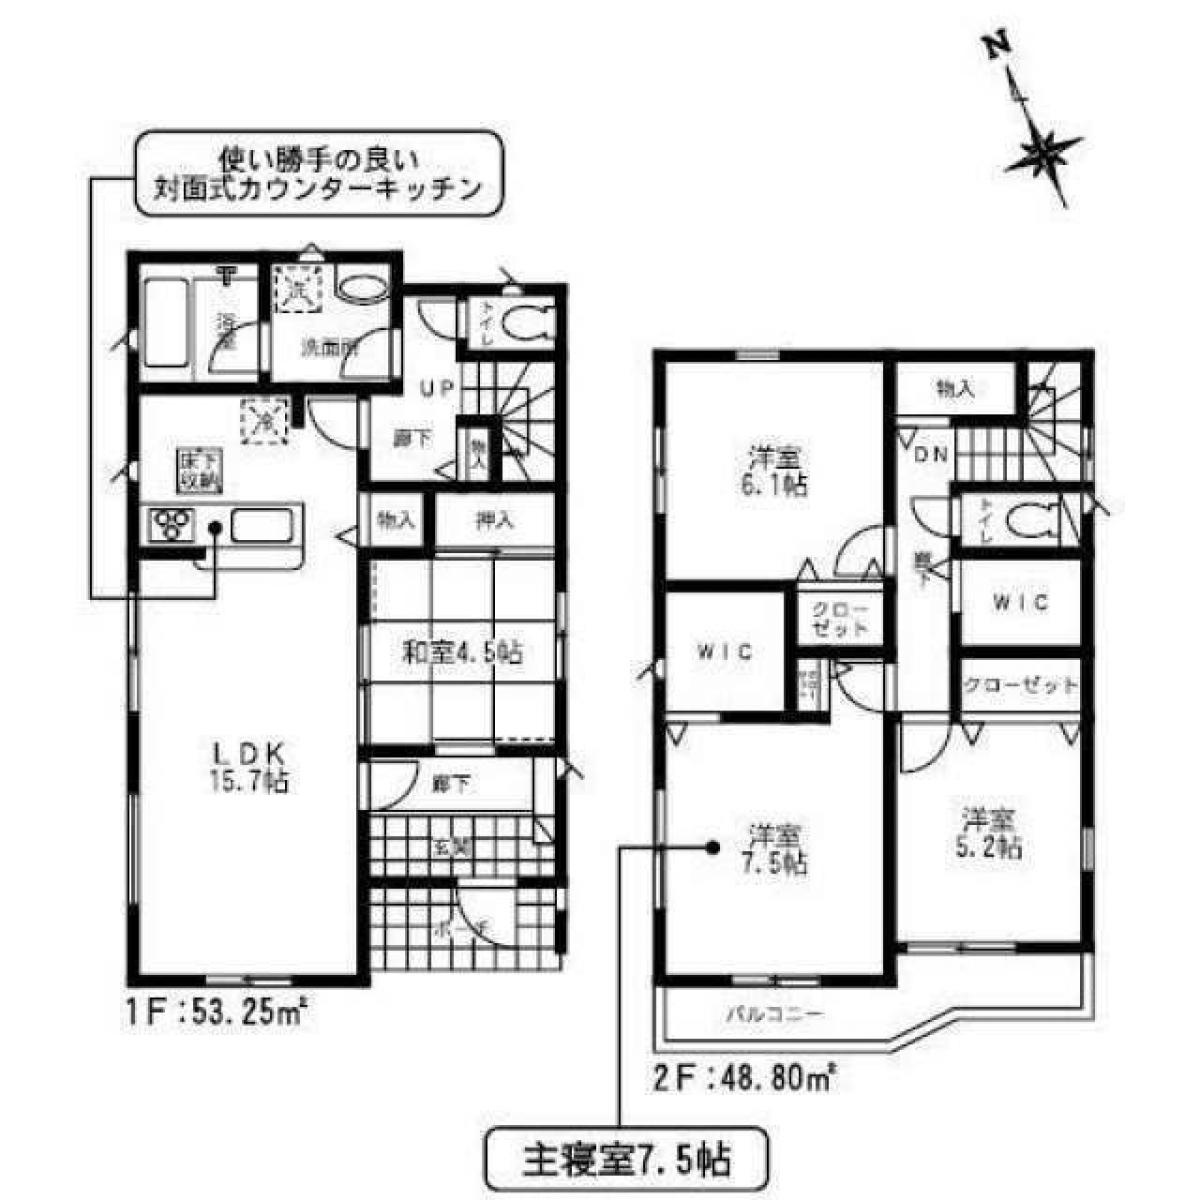 Picture of Home For Sale in Saitama Shi Minuma Ku, Saitama, Japan